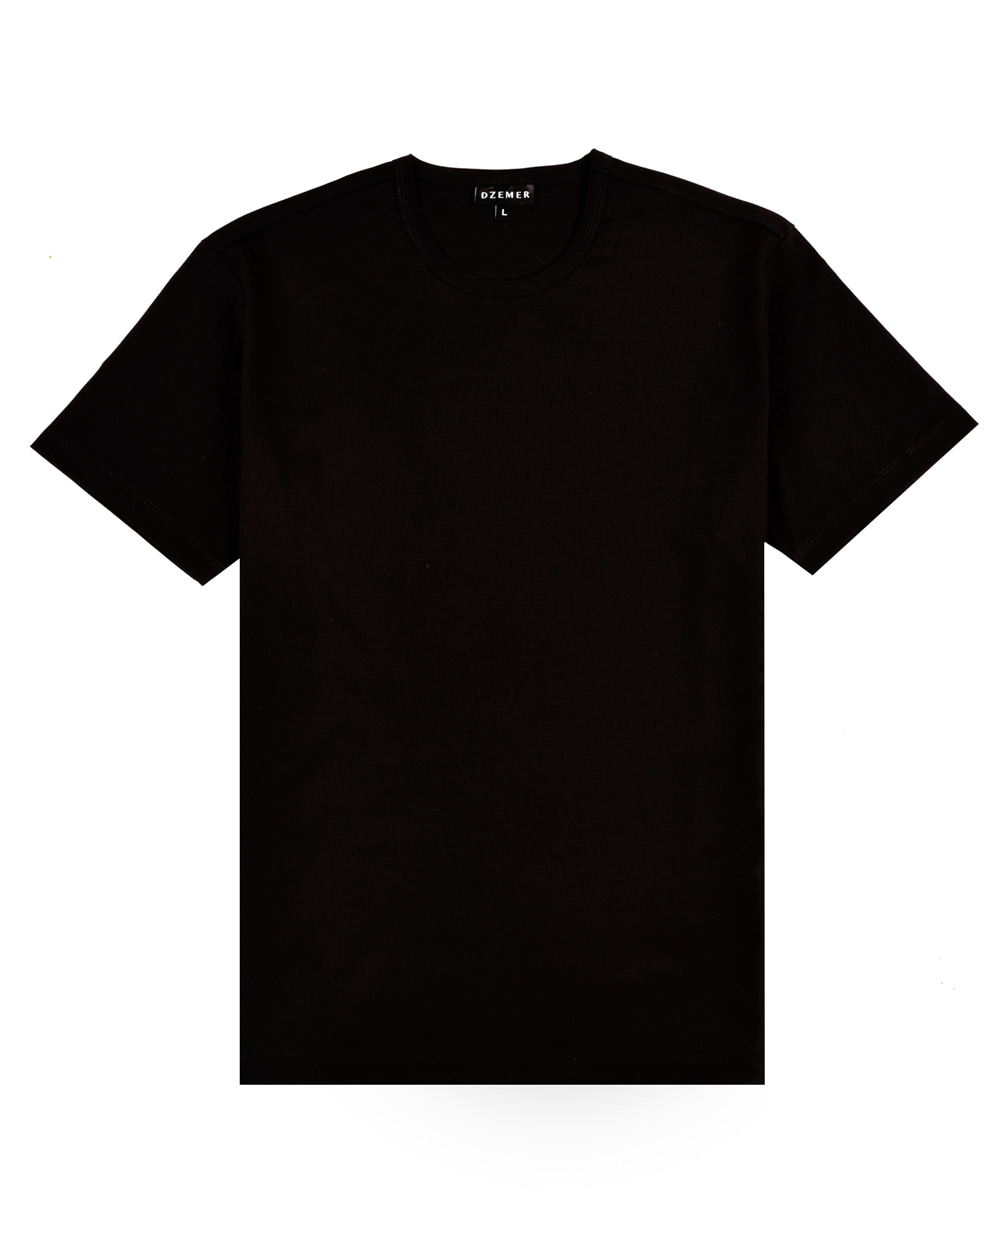 Cosimo classic T-shirts black Dzemer드제메르